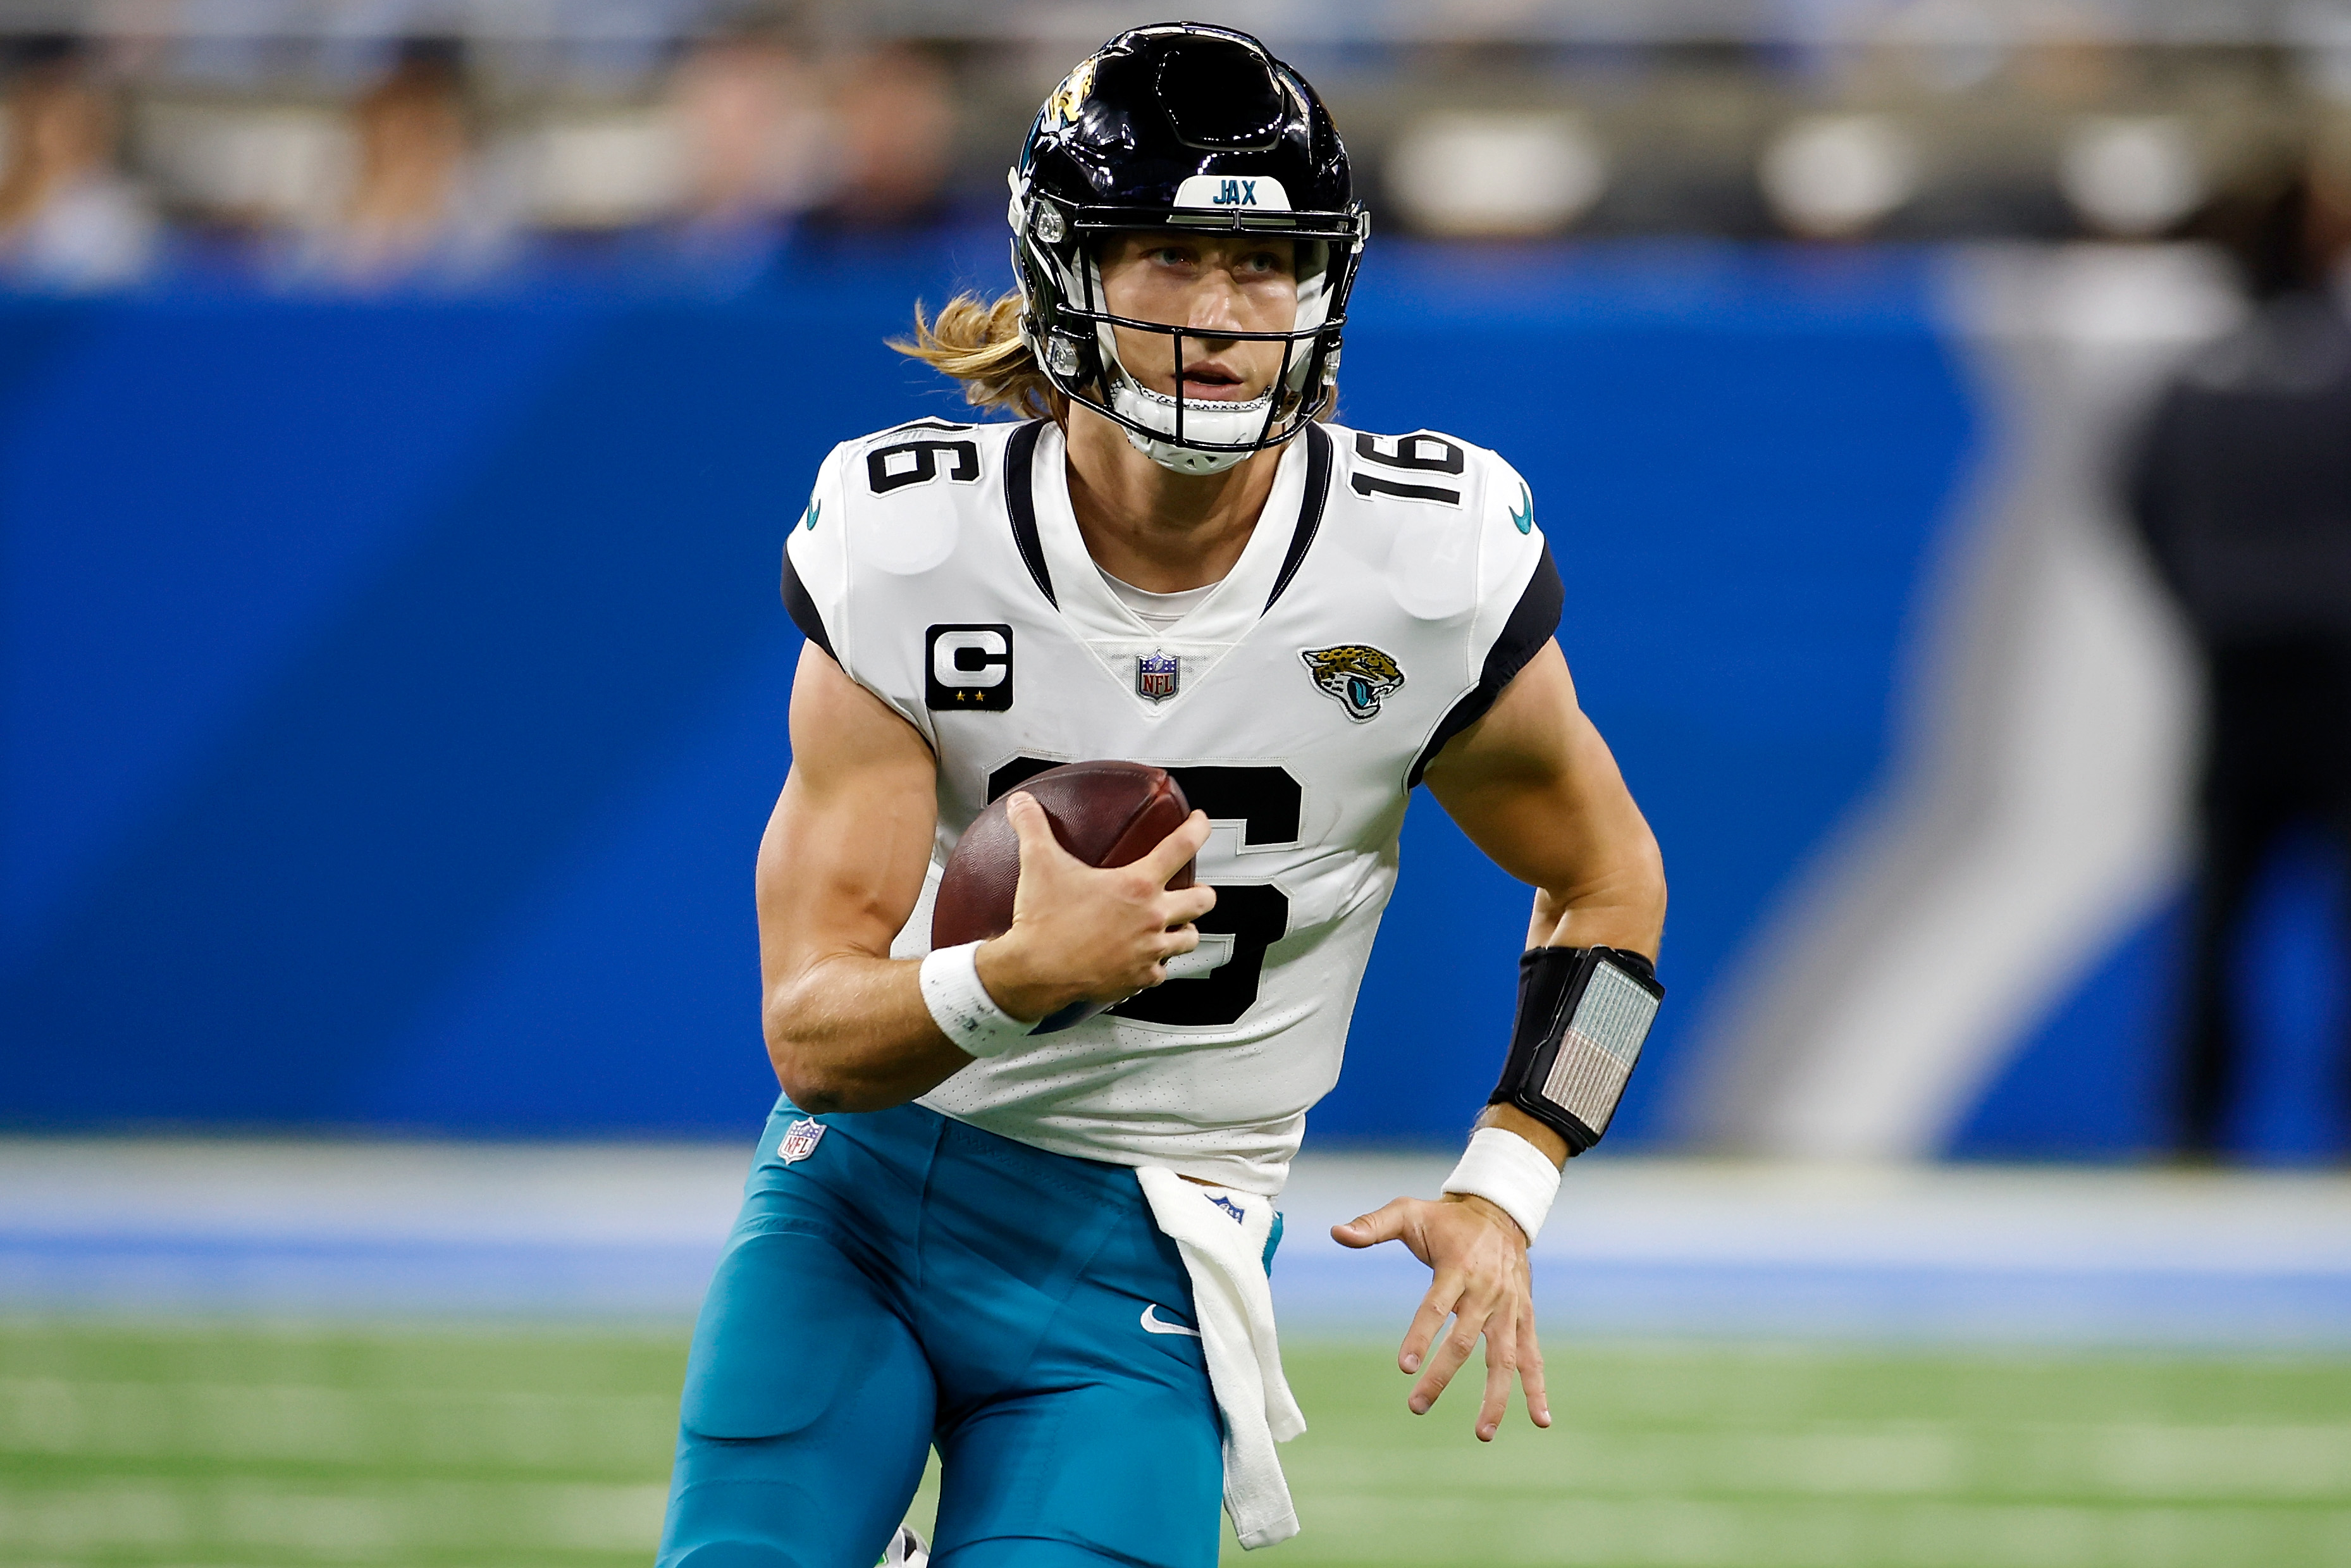 NFL picks today: Player prop bets to consider for Jaguars vs. Jets